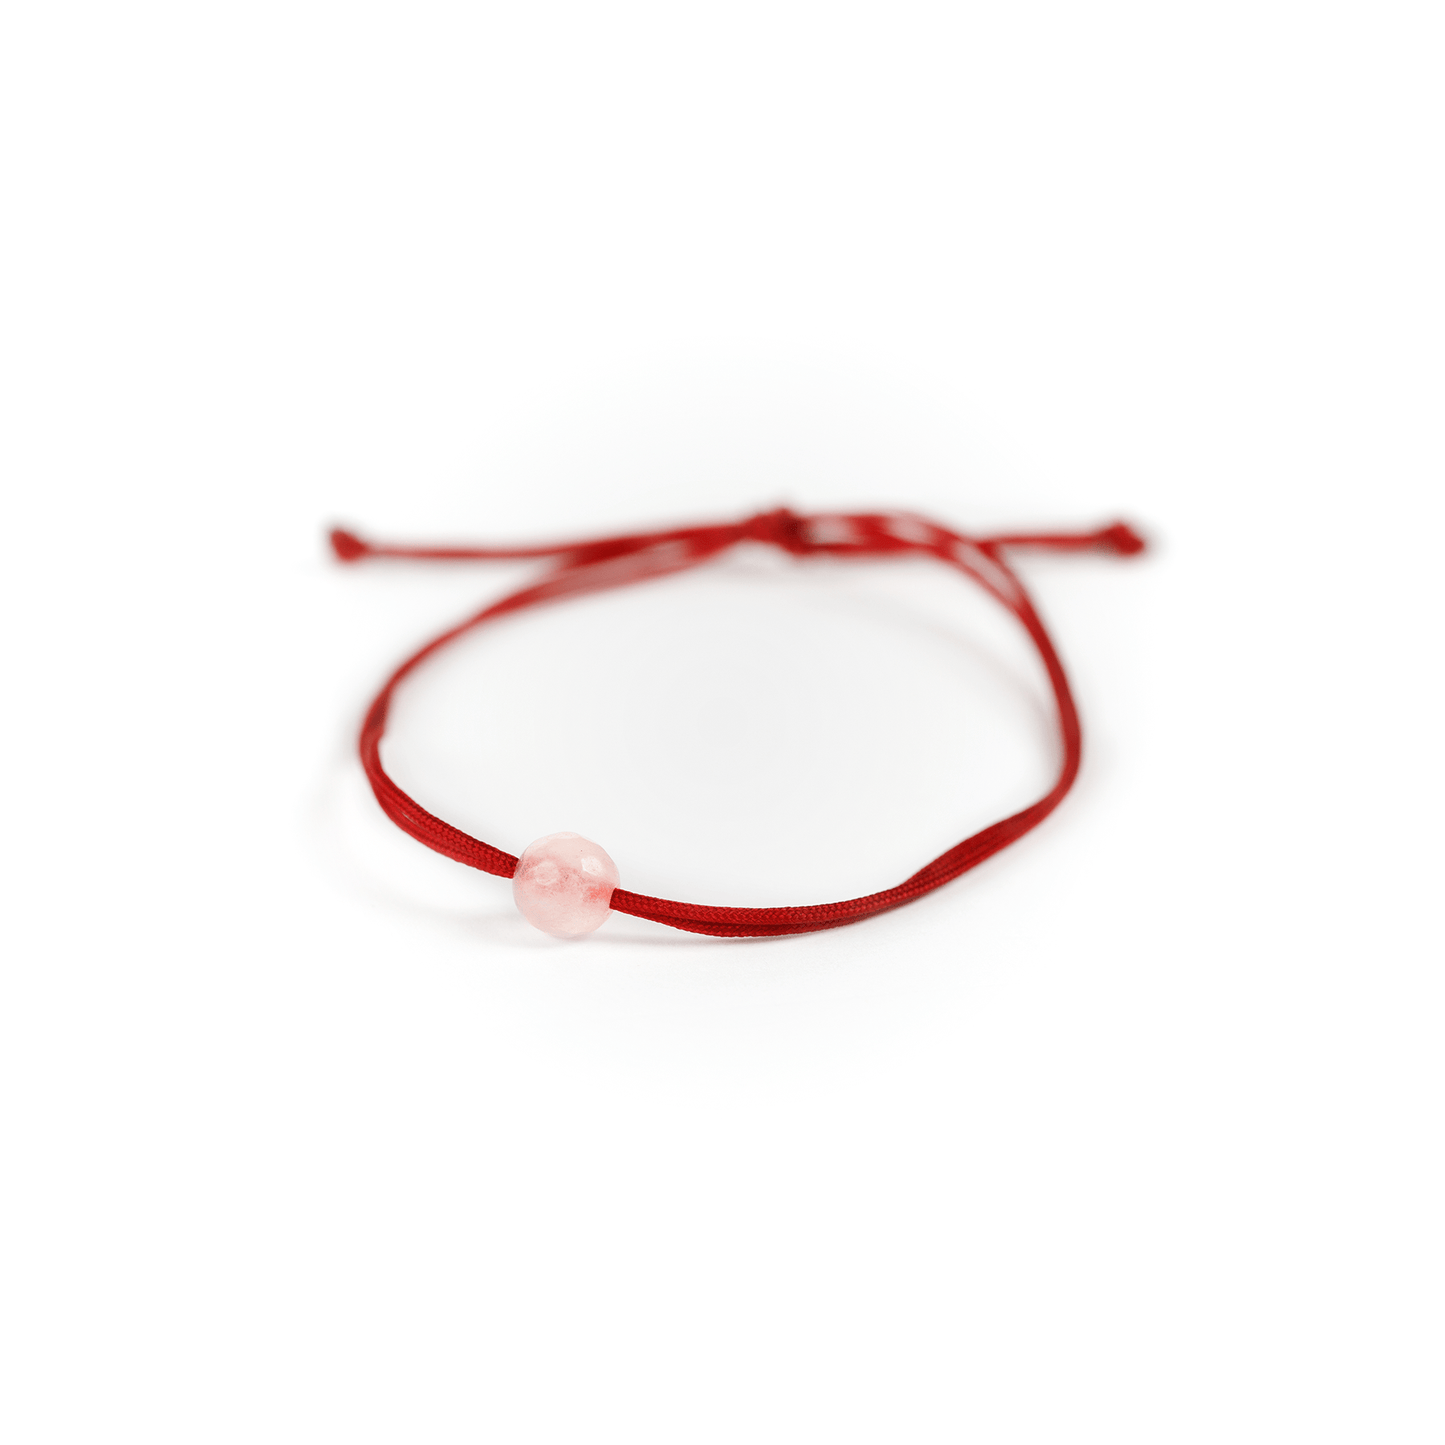 Close up of the rose quartz stone on red nylon string.